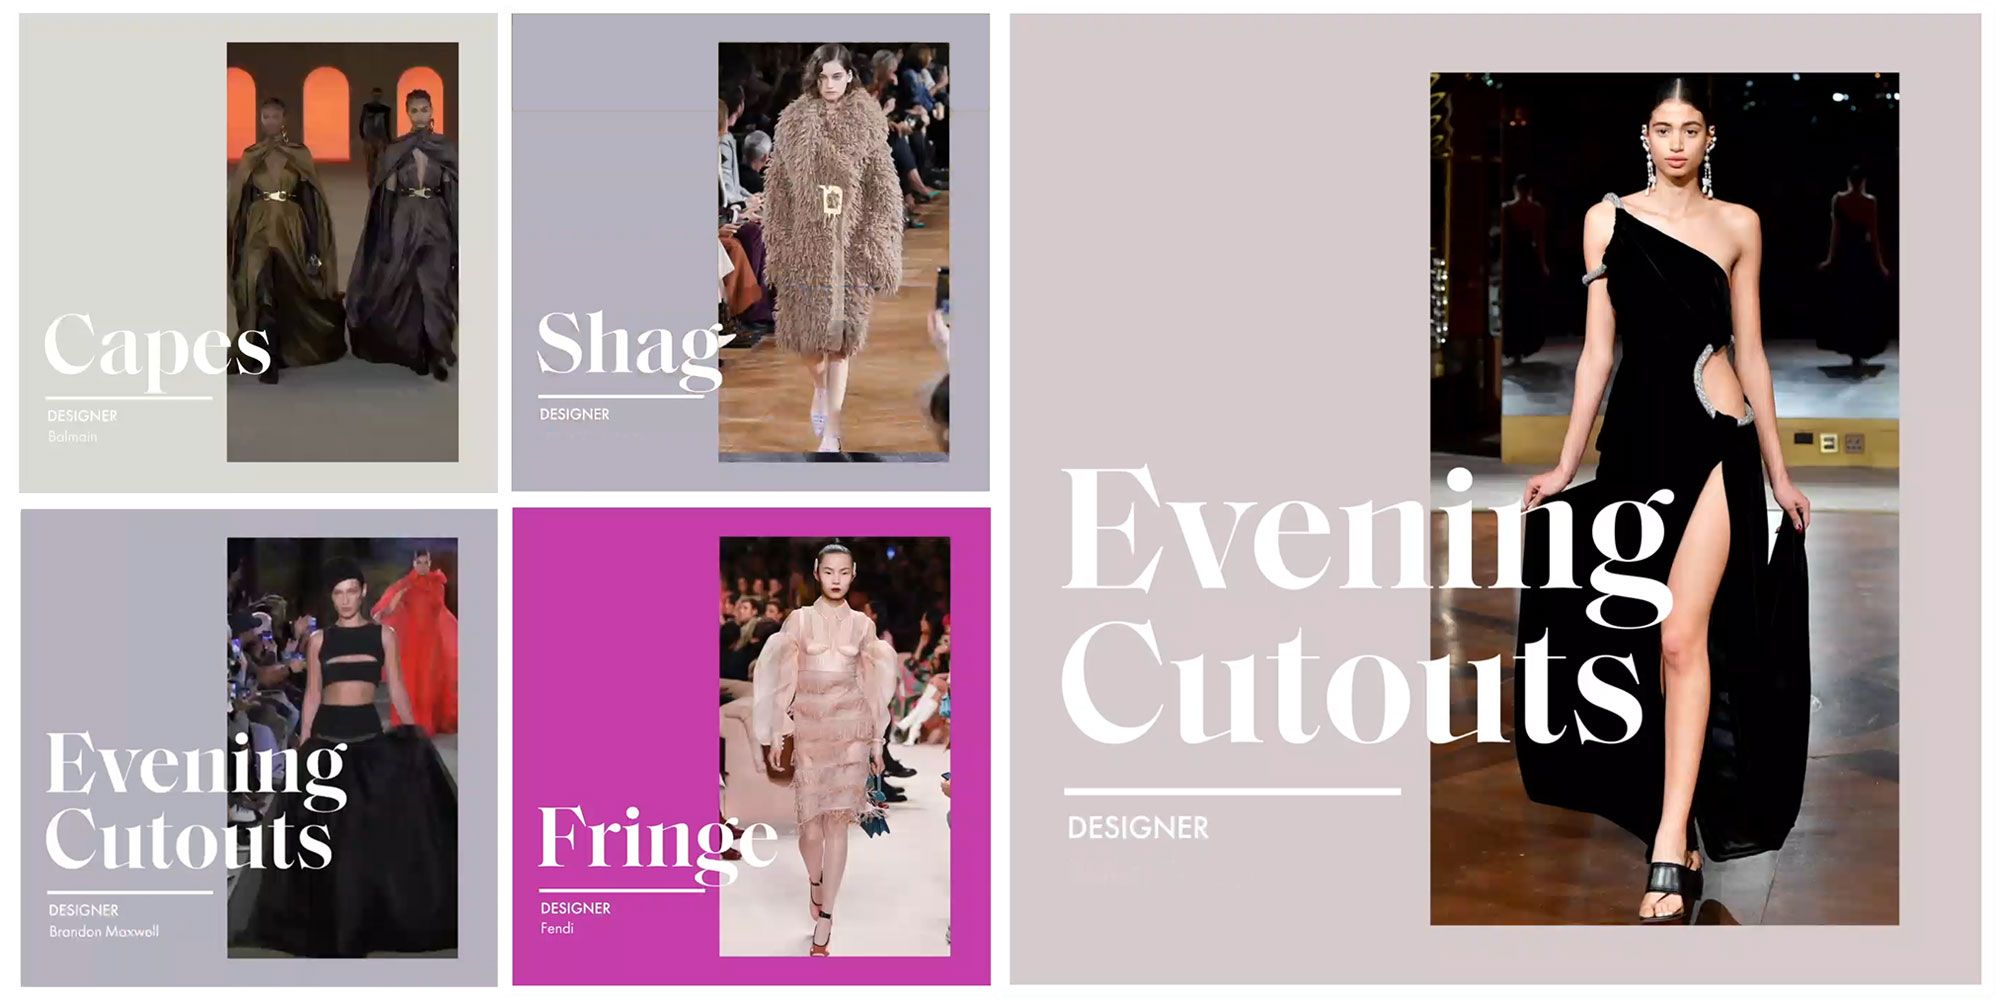 Livestream: Watch Louis Vuitton's Fall/Winter 2019 fashion show